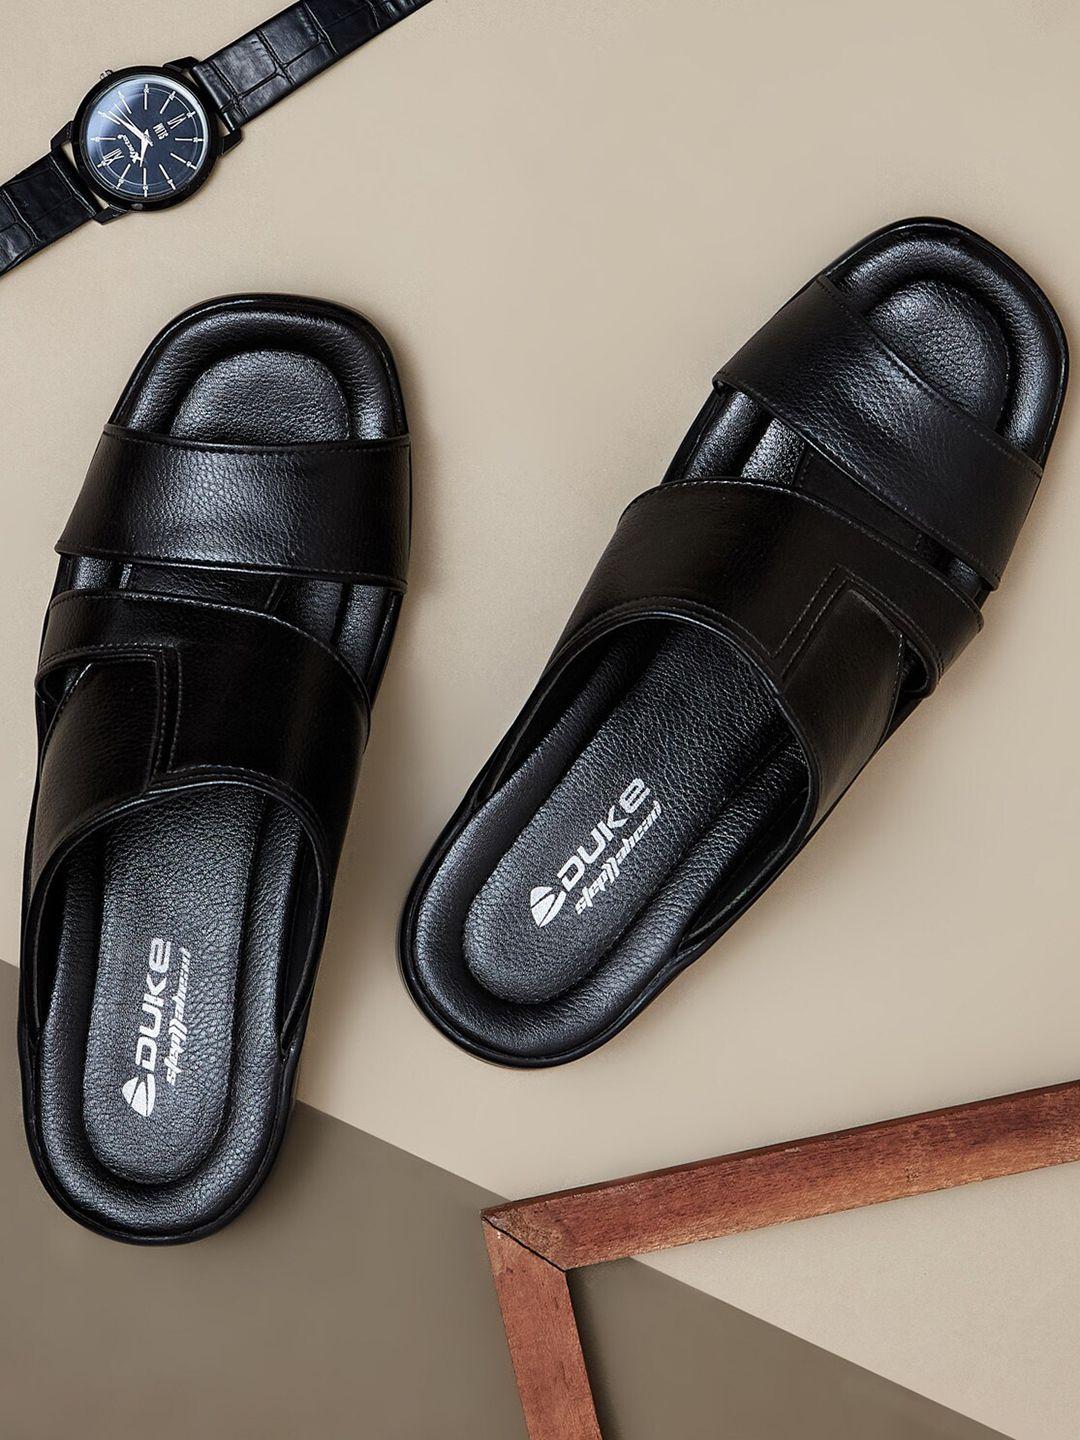 duke-men-open-toe-comfort-sandals